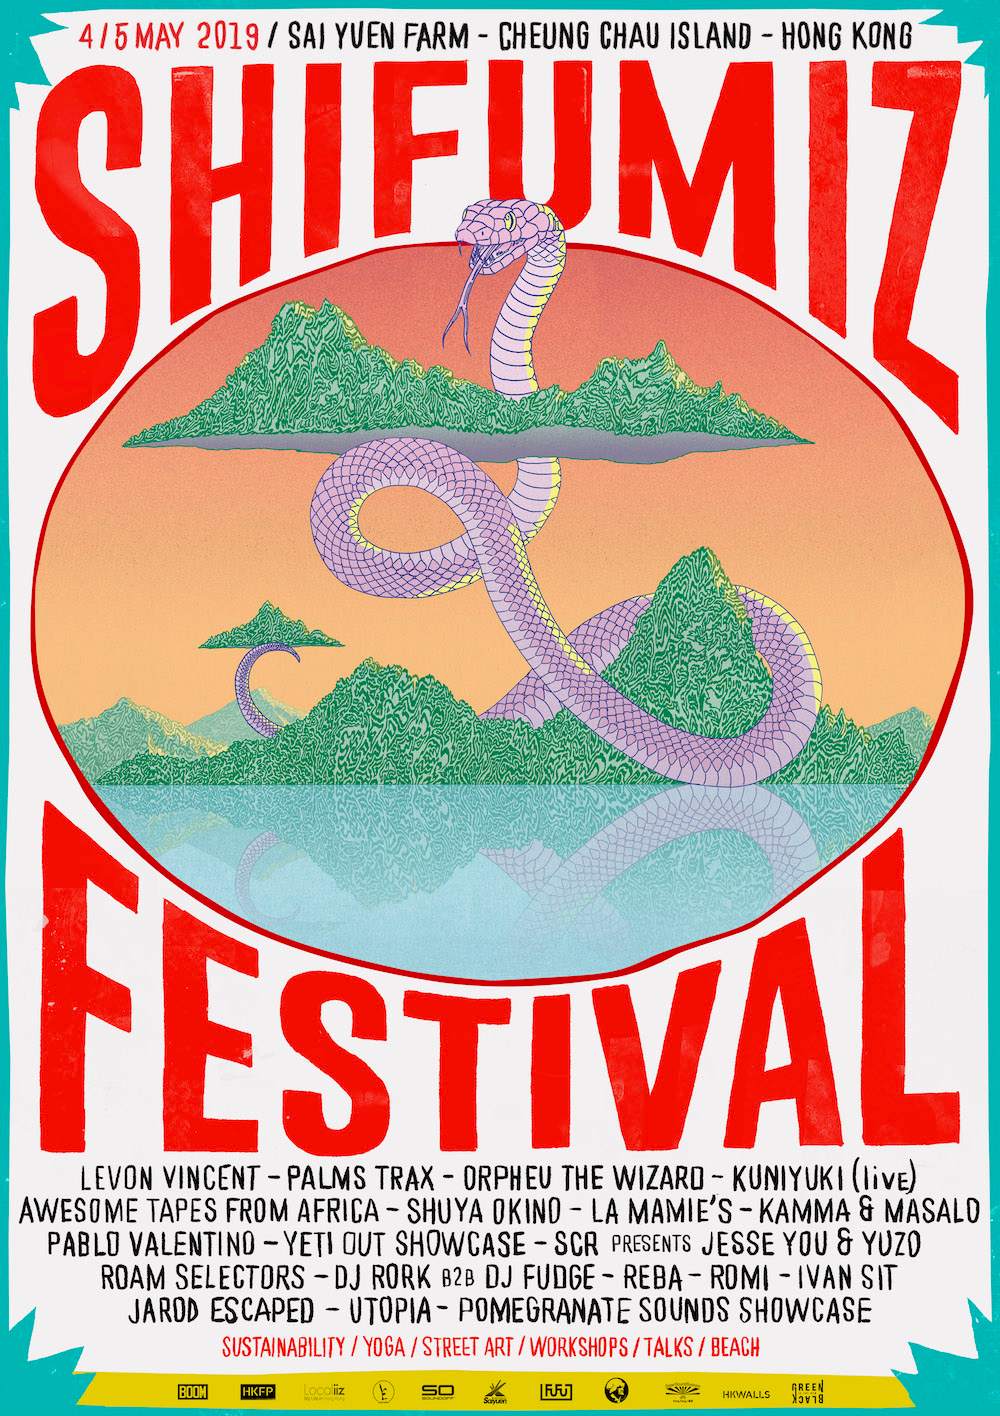 Hong Kong's Shi Fu Miz Festival invites Kuniyuki, Palms Trax for 2019 image